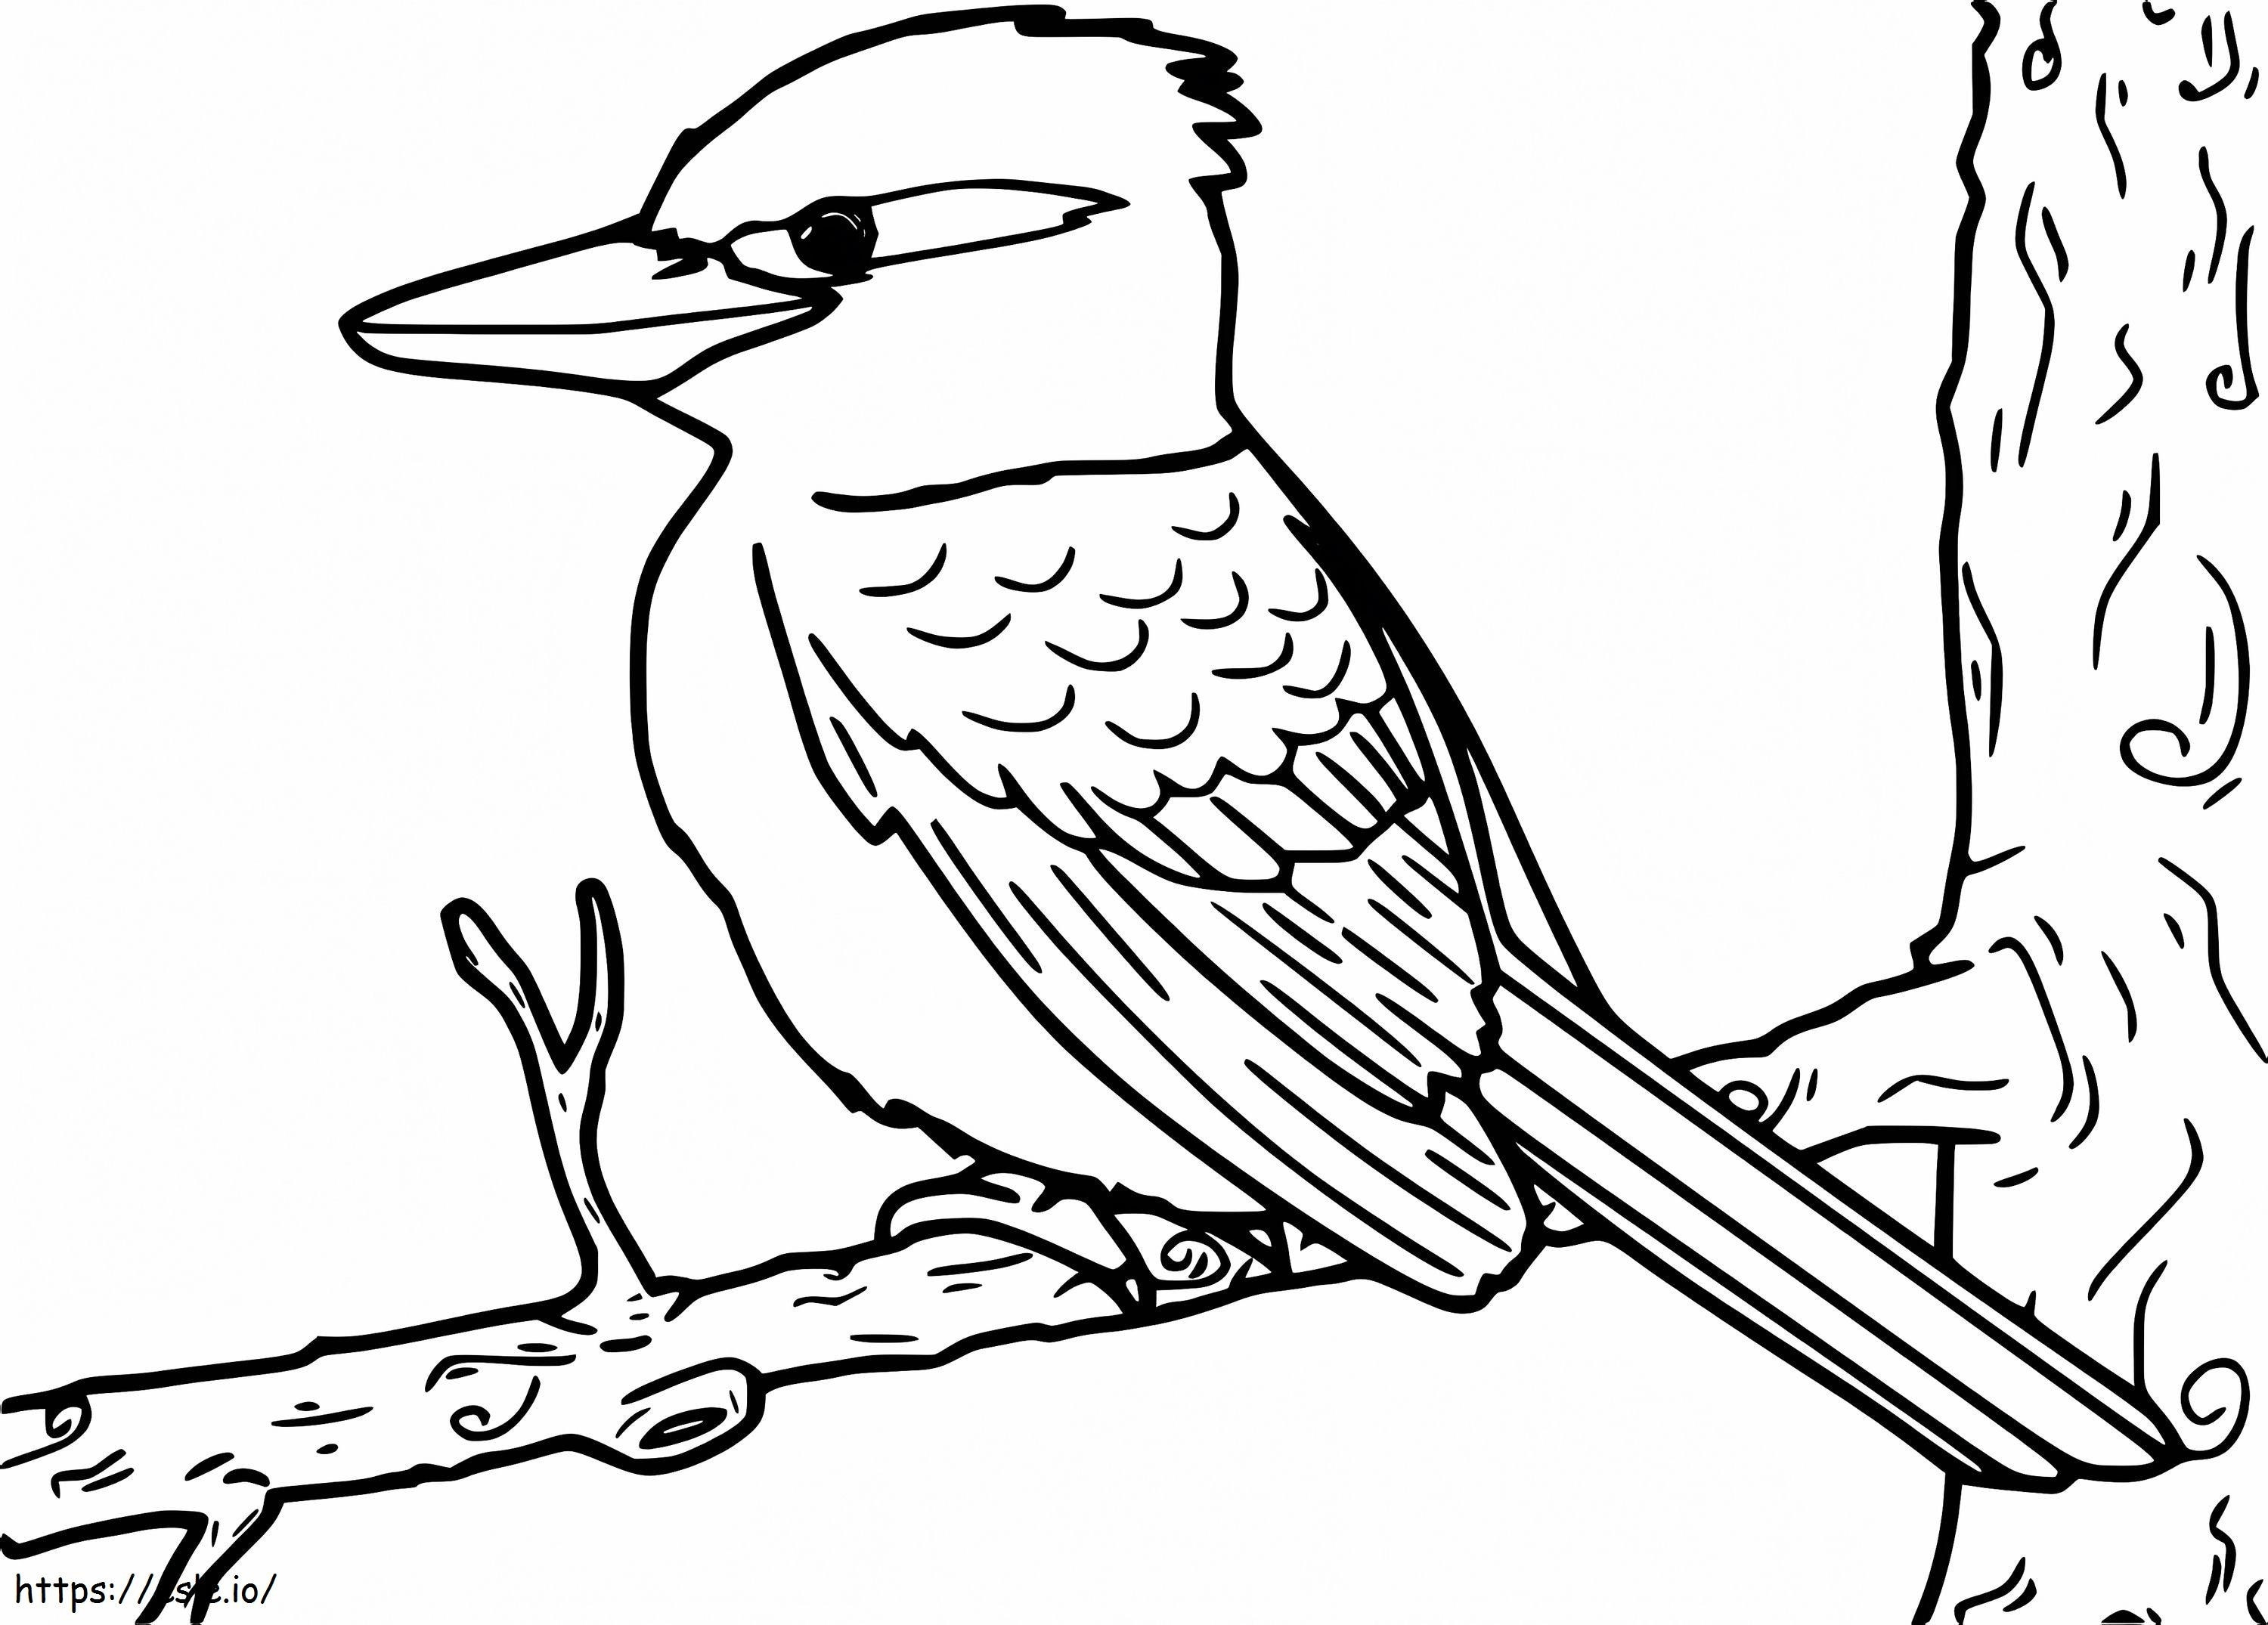 Kookaburra Printable coloring page